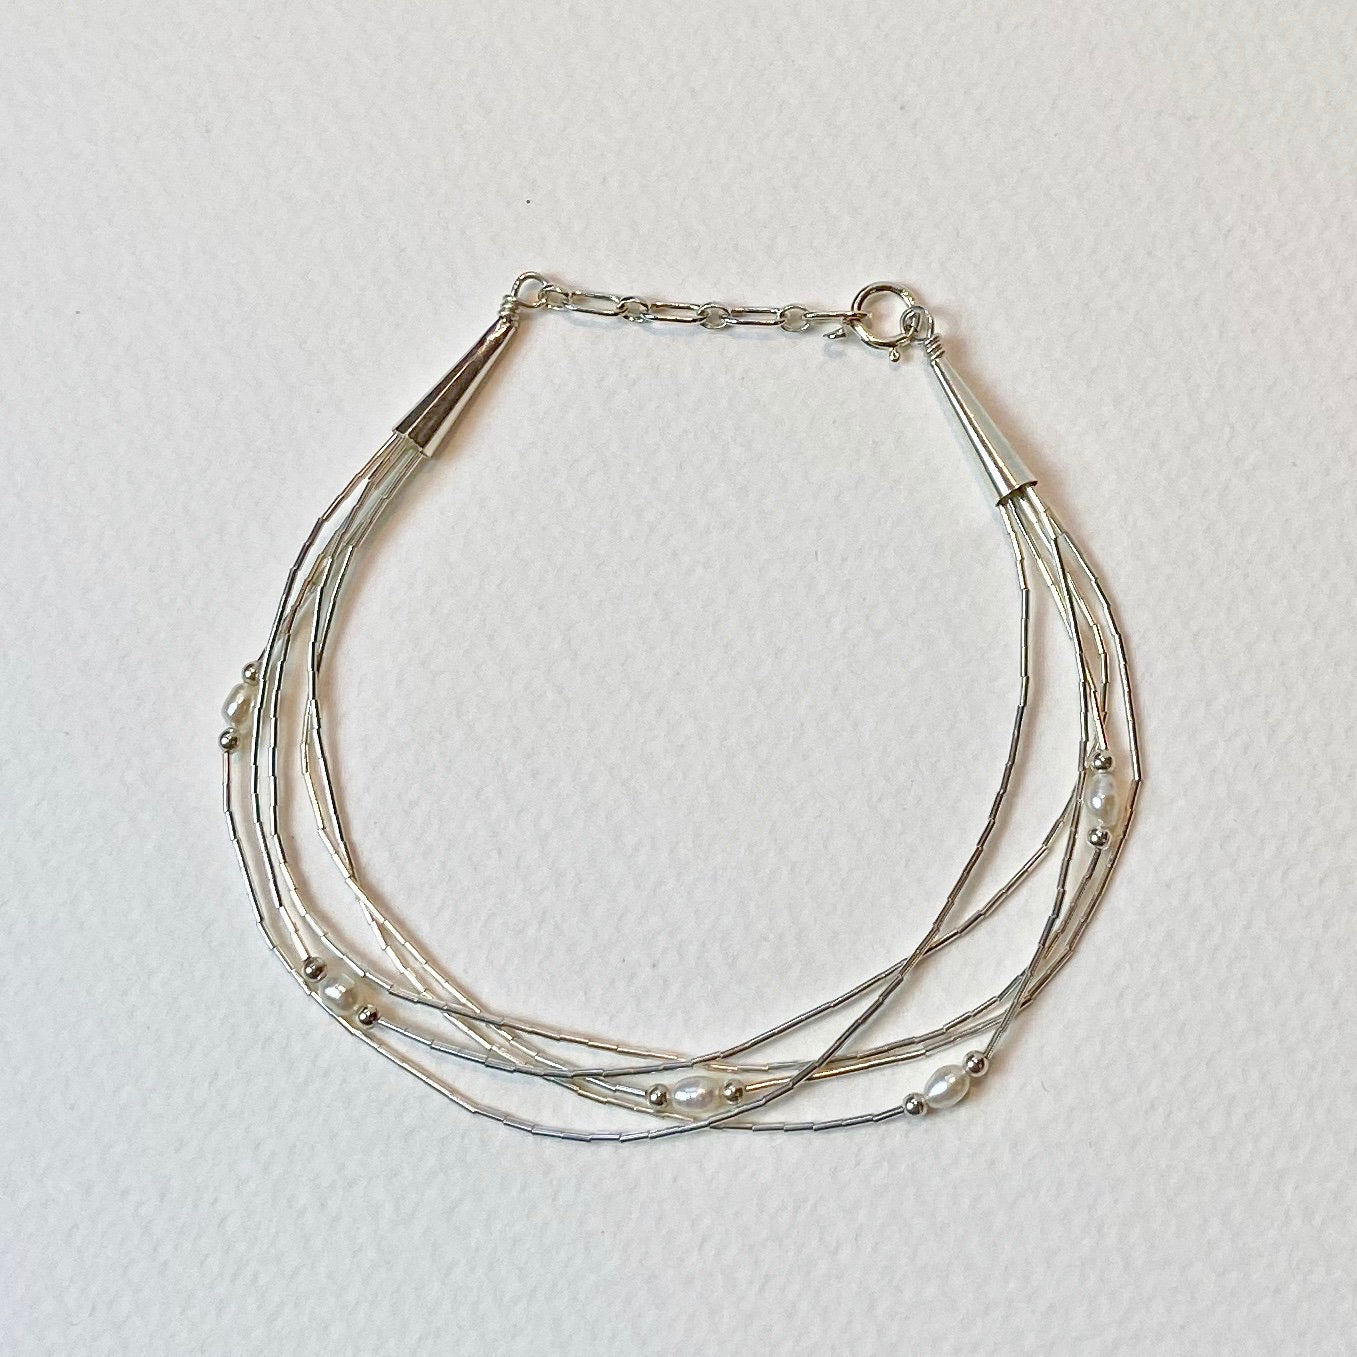 5 Strand Silver and Pearl Bracelet - The Nancy Smillie Shop - Art, Jewellery & Designer Gifts Glasgow